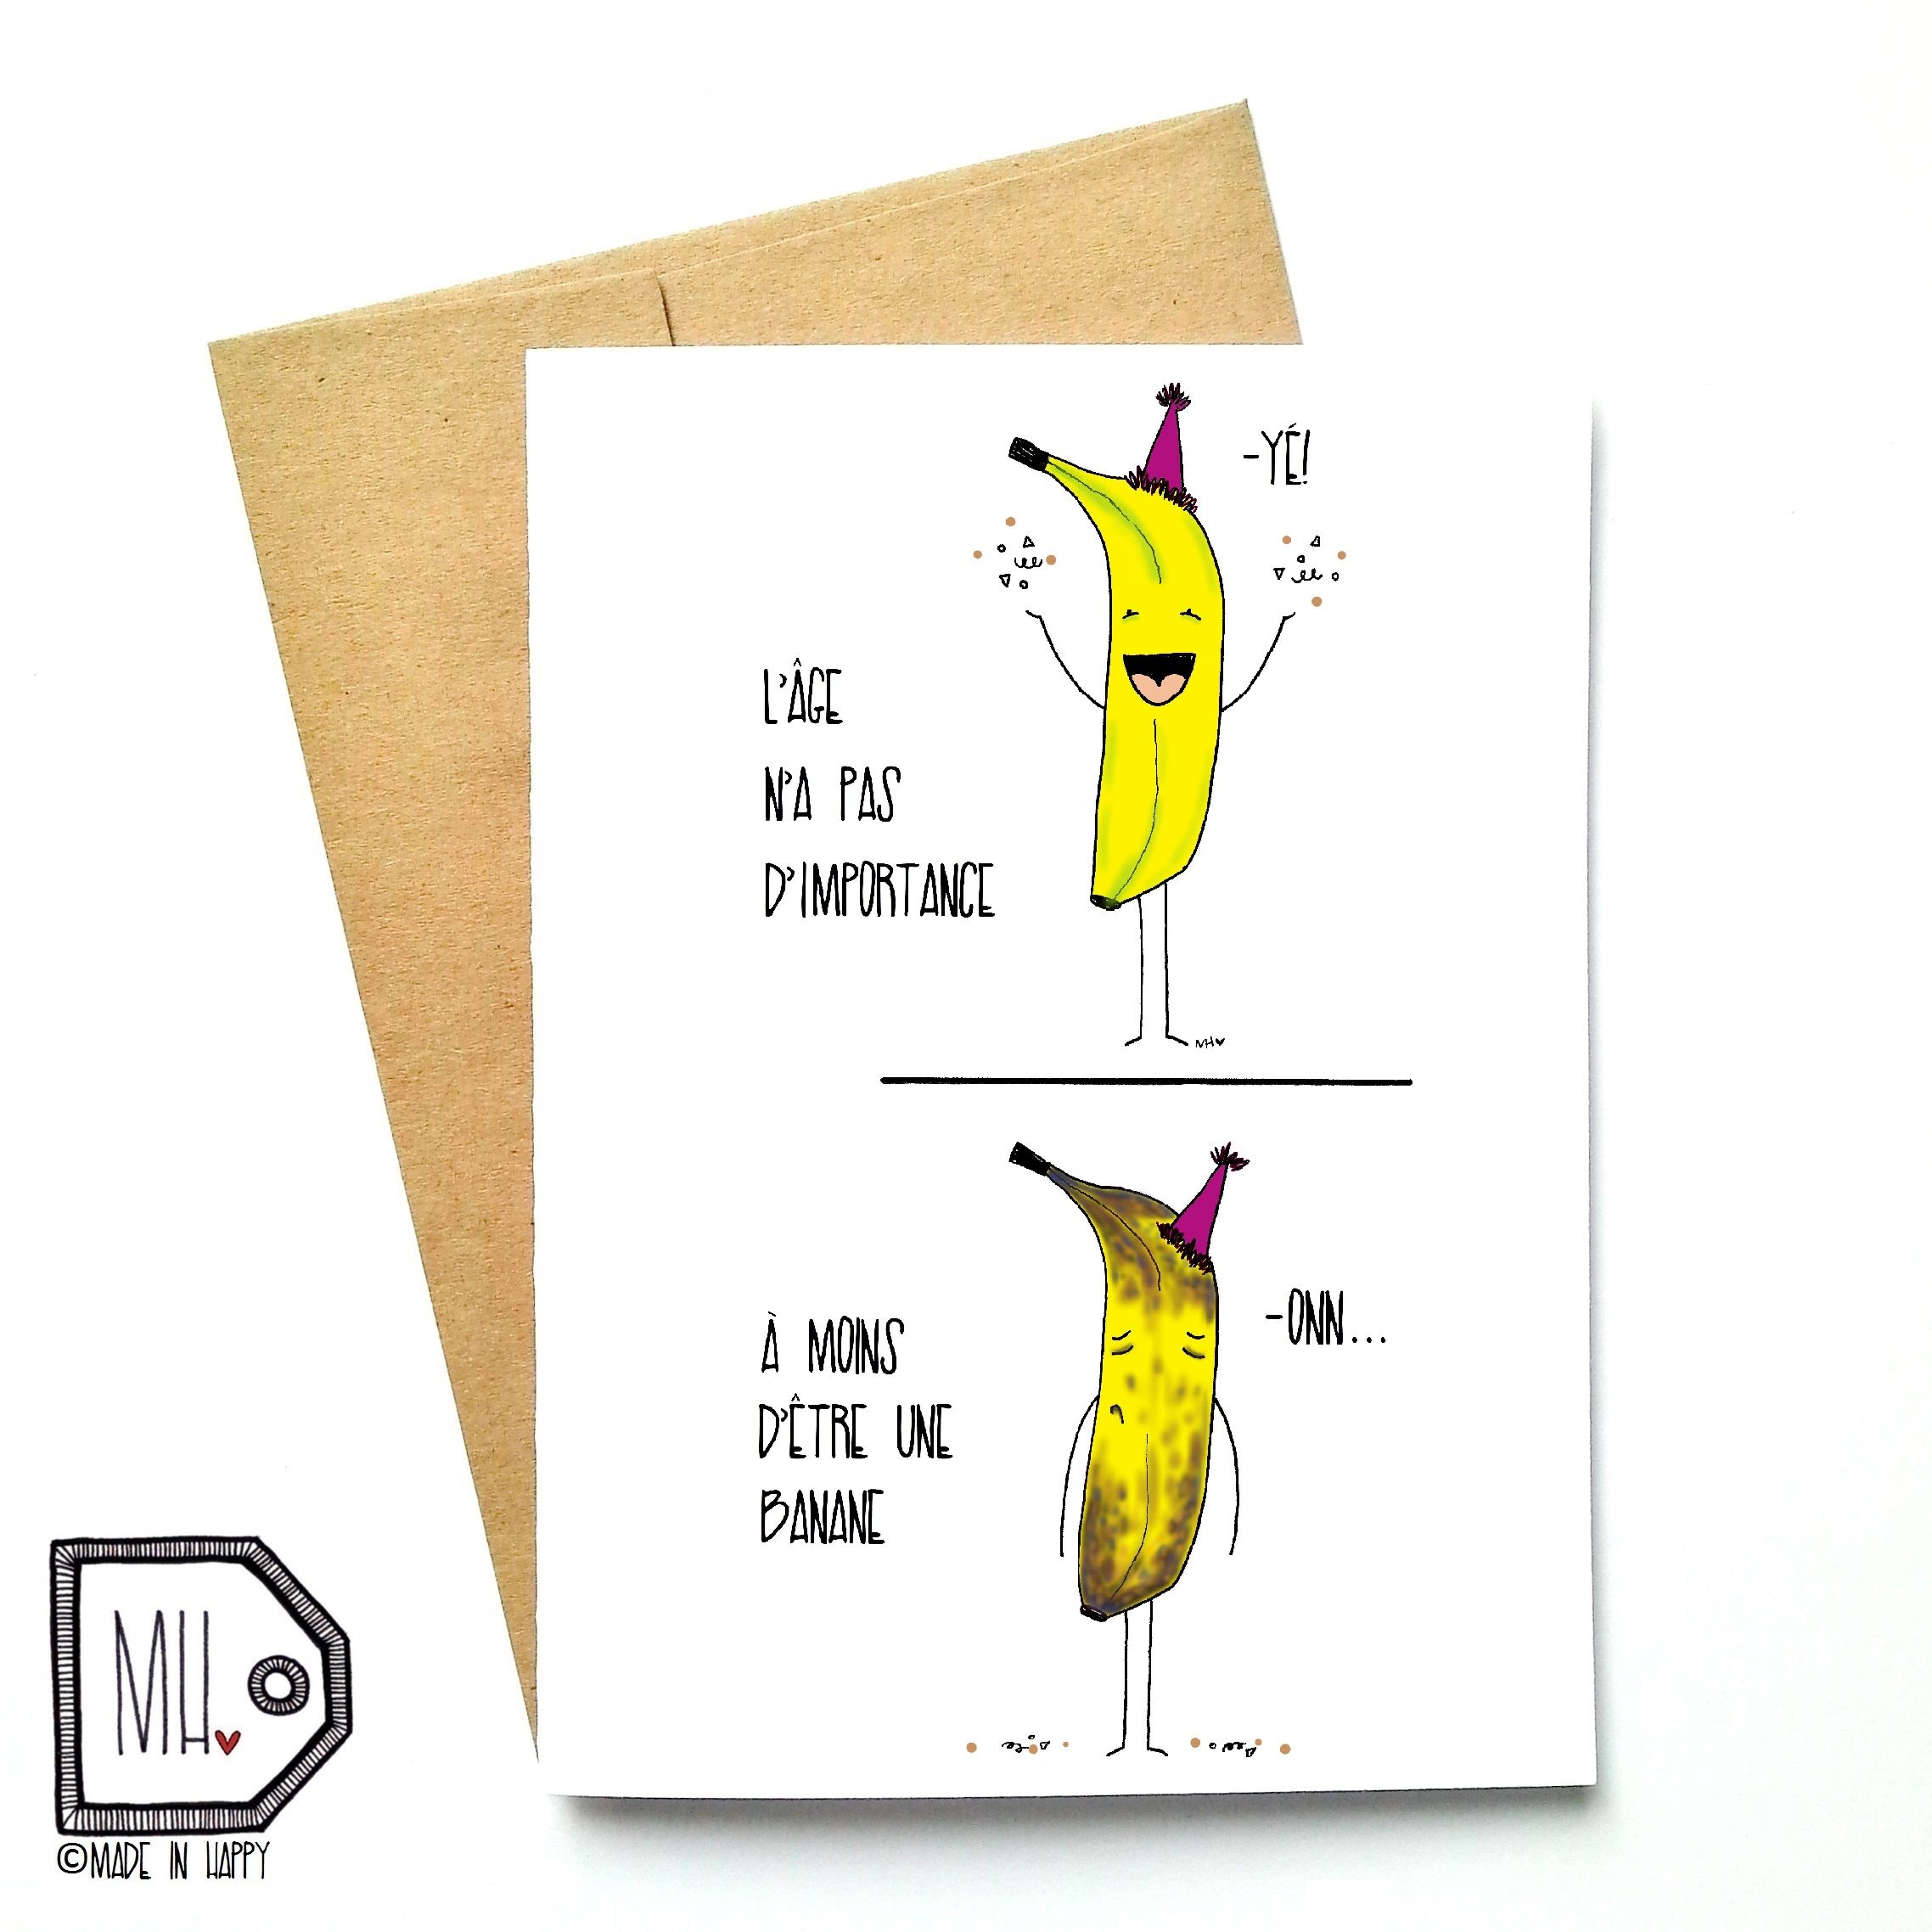 banana birthday card